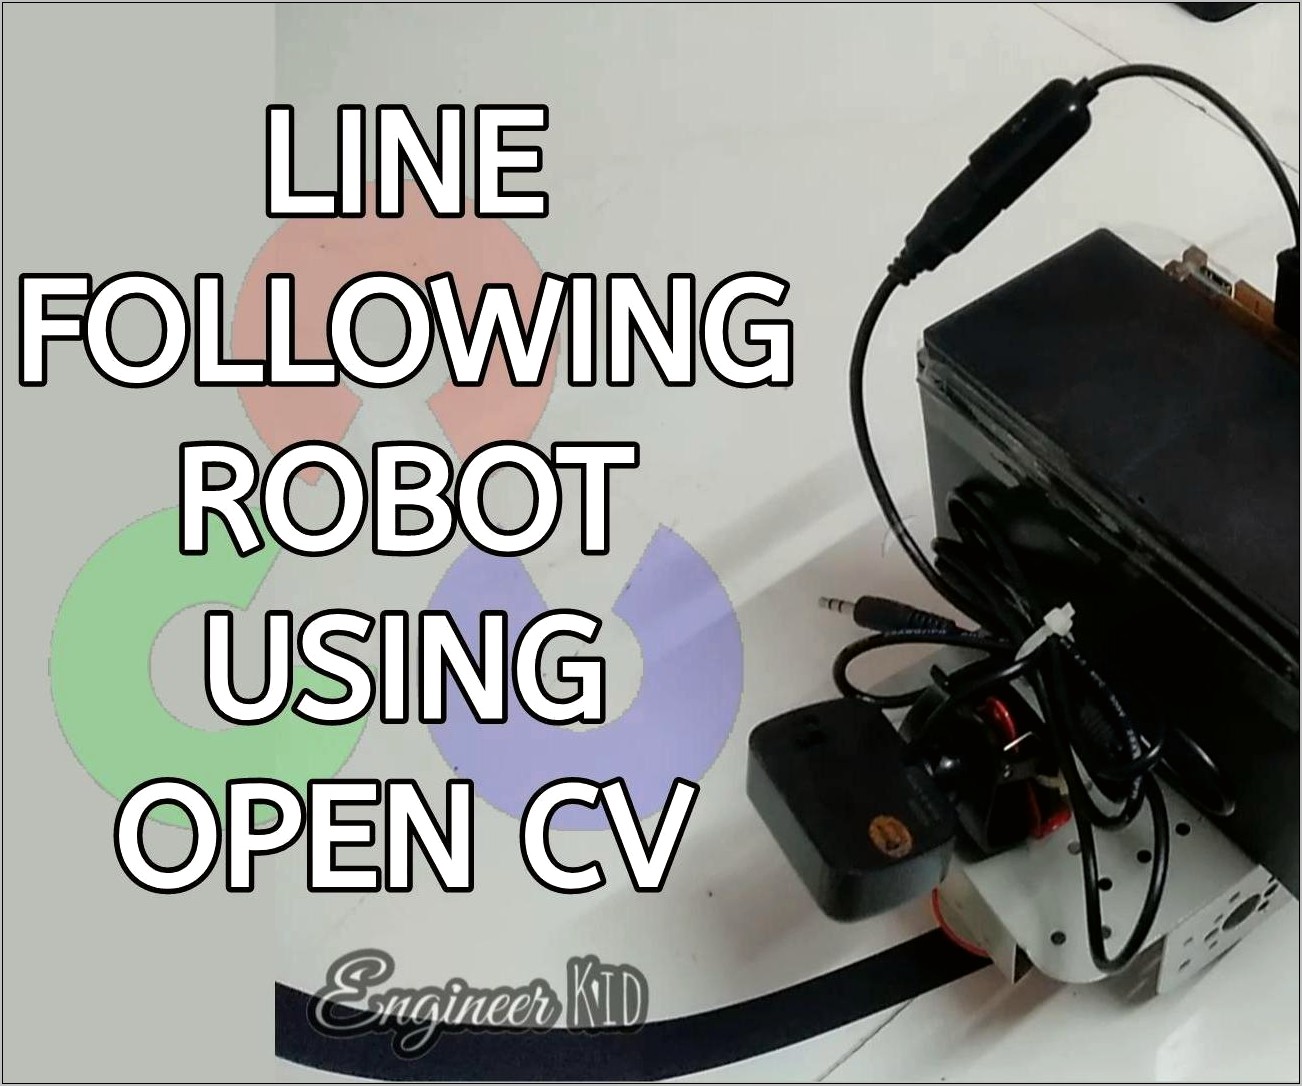 Put Line Follower Robot Project On Resume